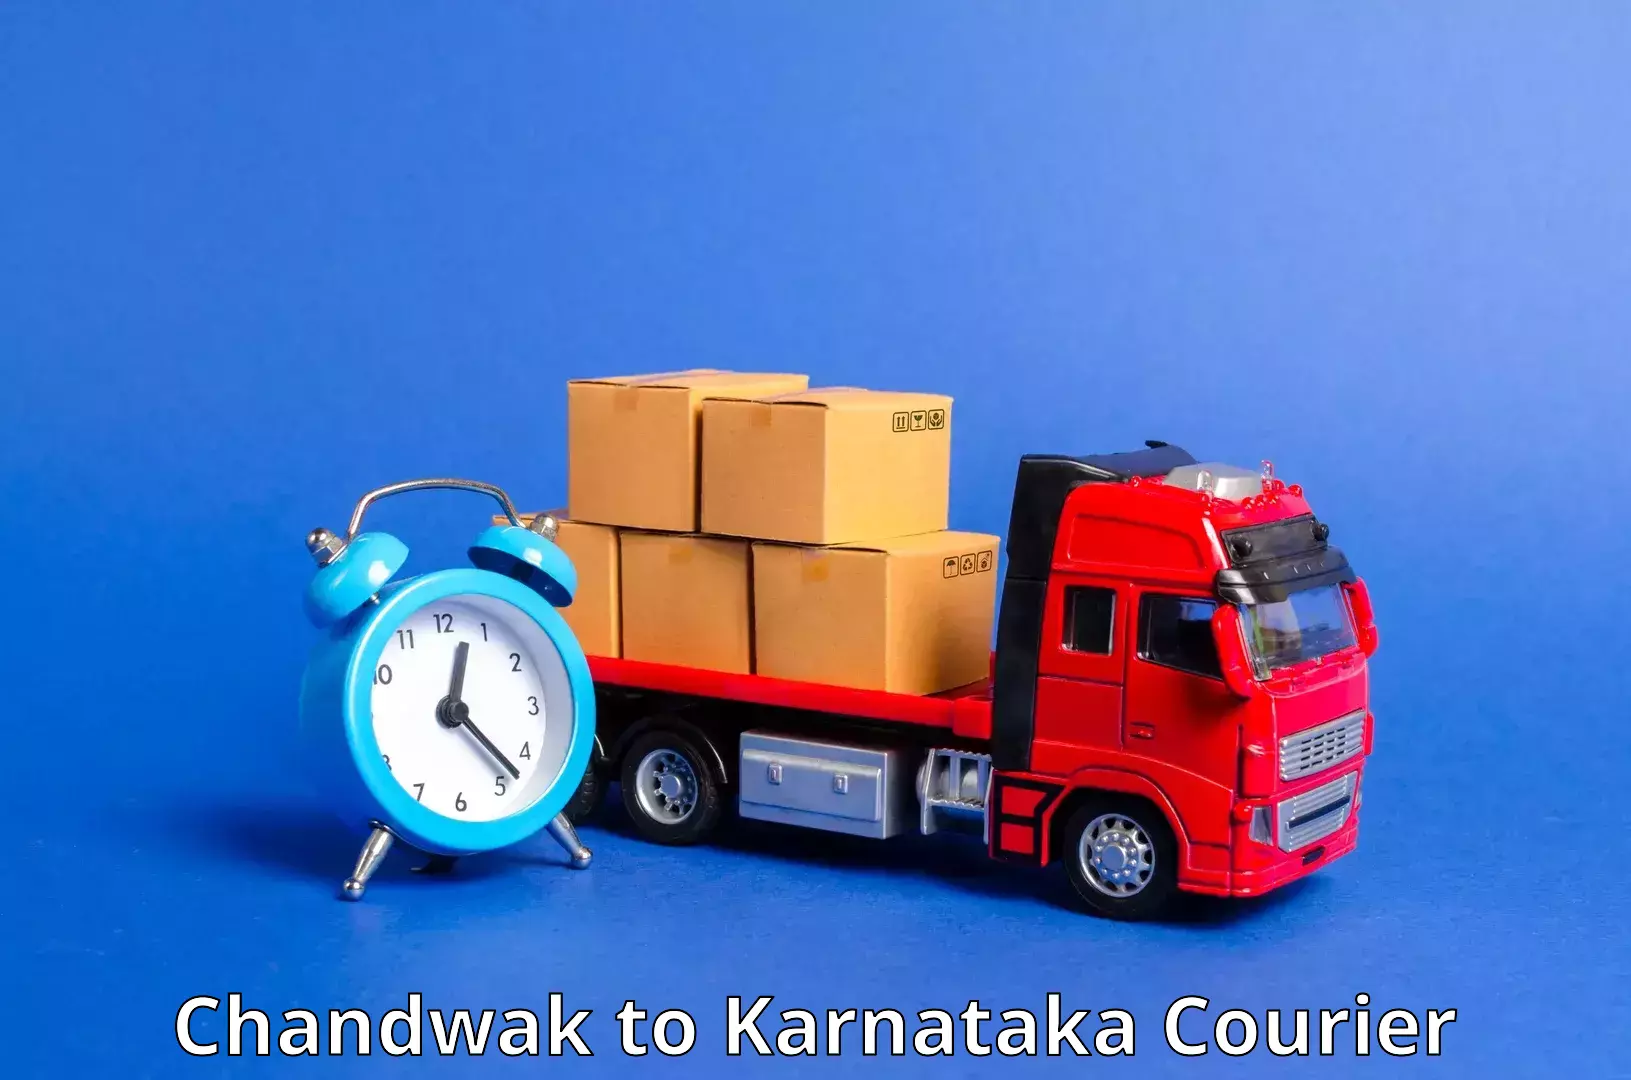 High-performance logistics Chandwak to Bangalore